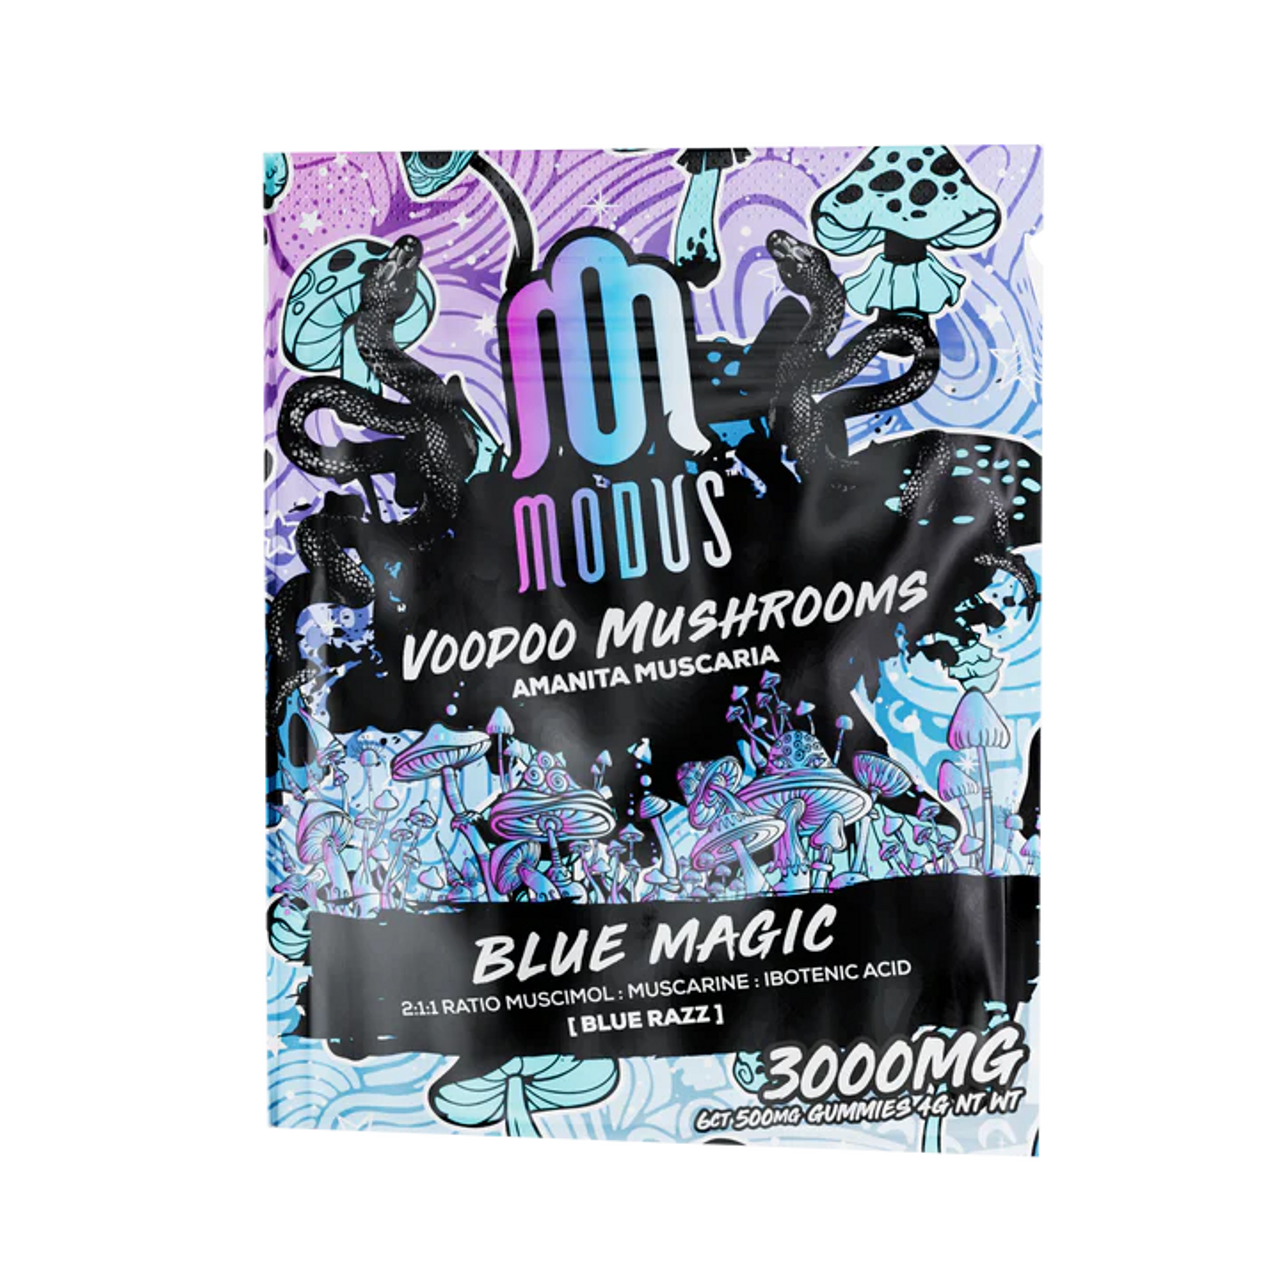 Modus Voodoo Mushrooms 3000mg Gummies - Blue Magic